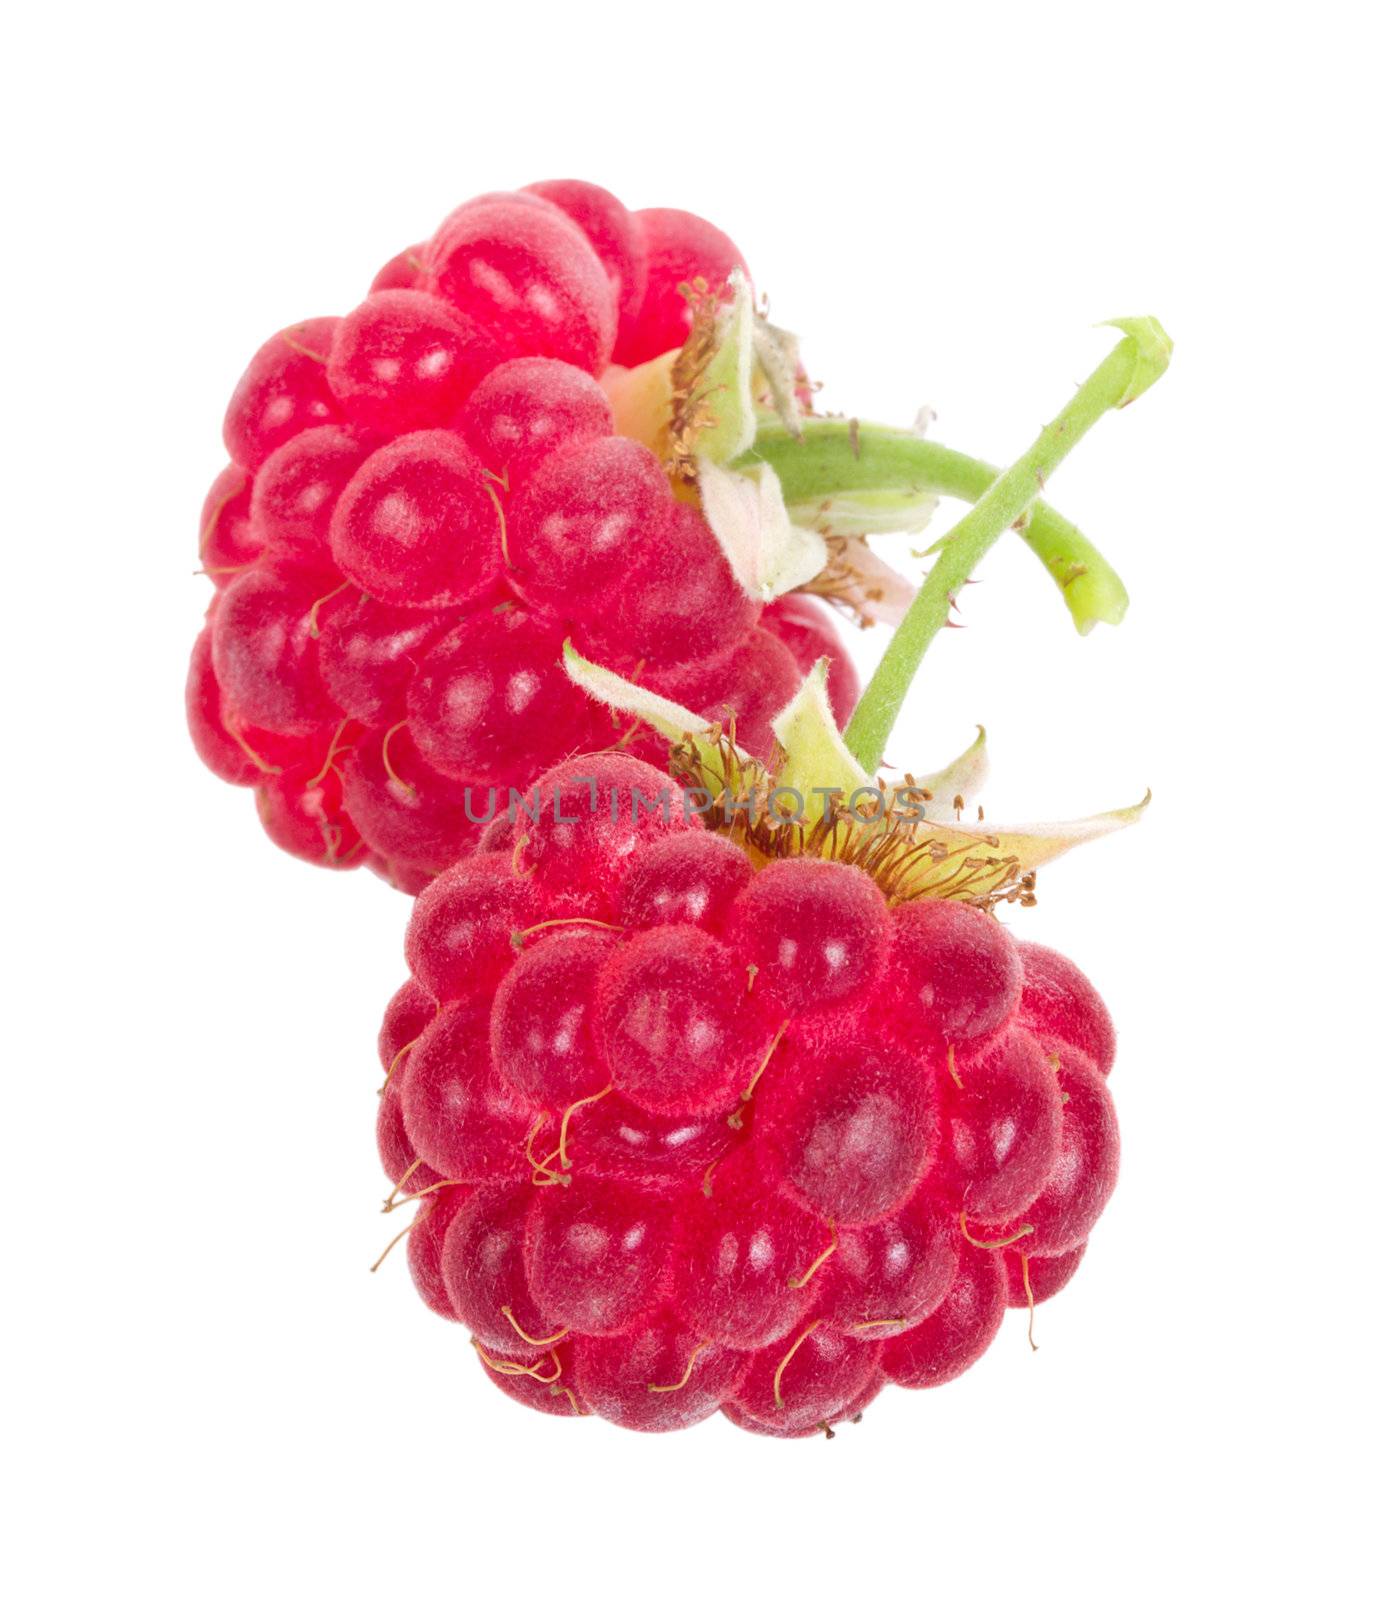 two ripe raspberries by Alekcey